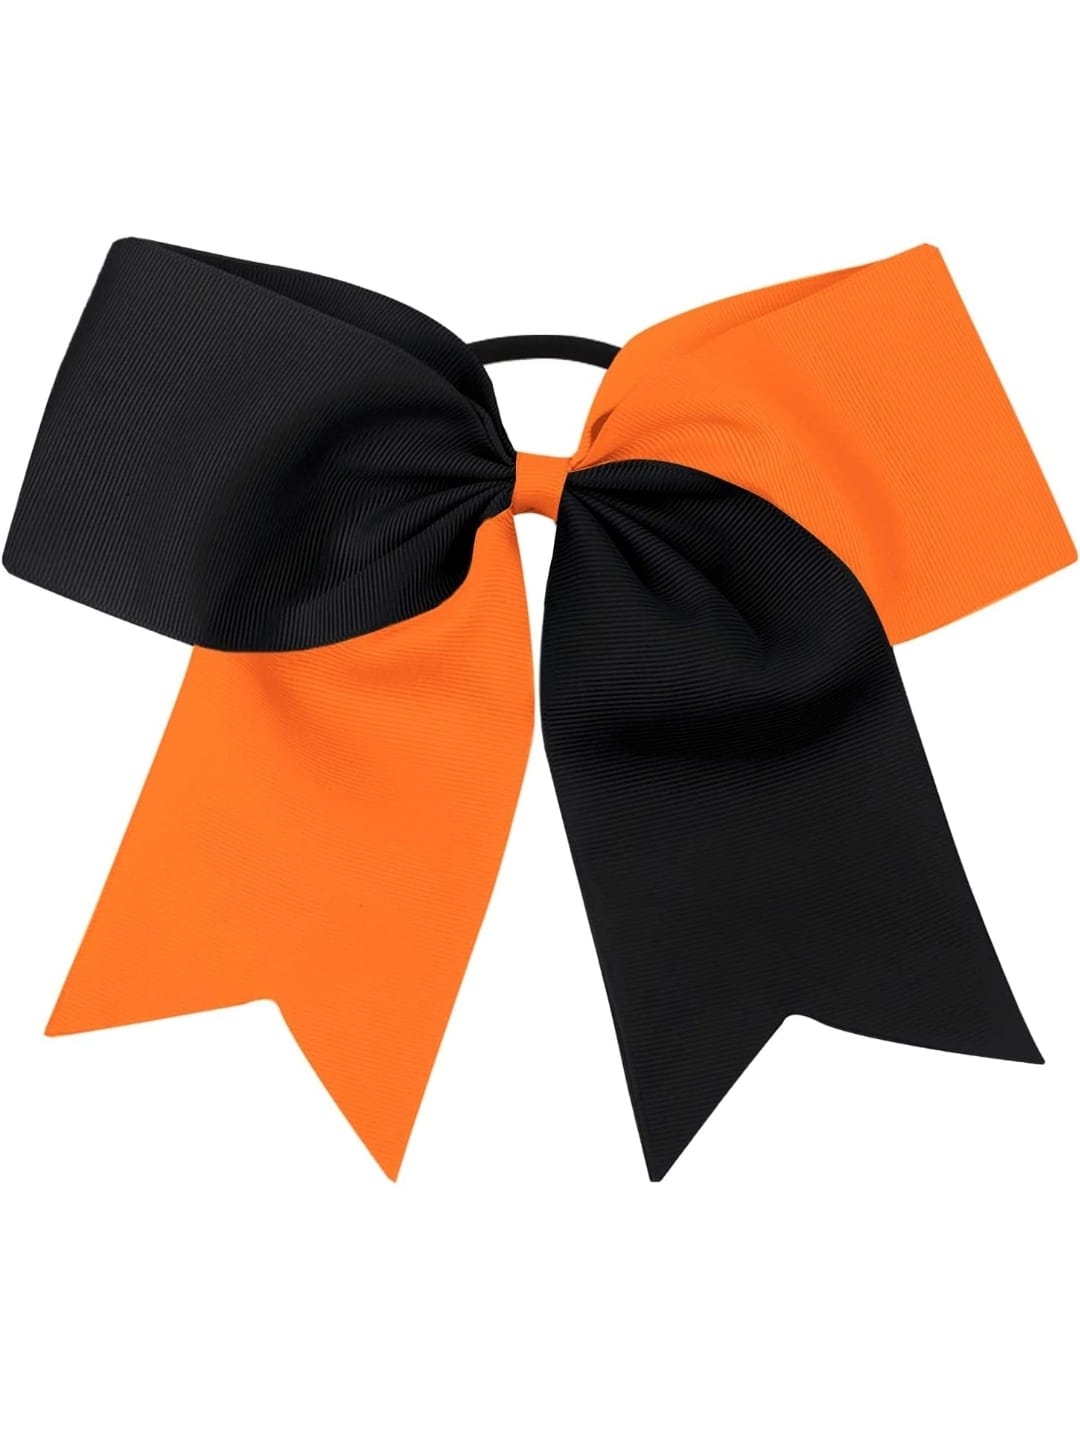 Orange and Black Cheer Bow